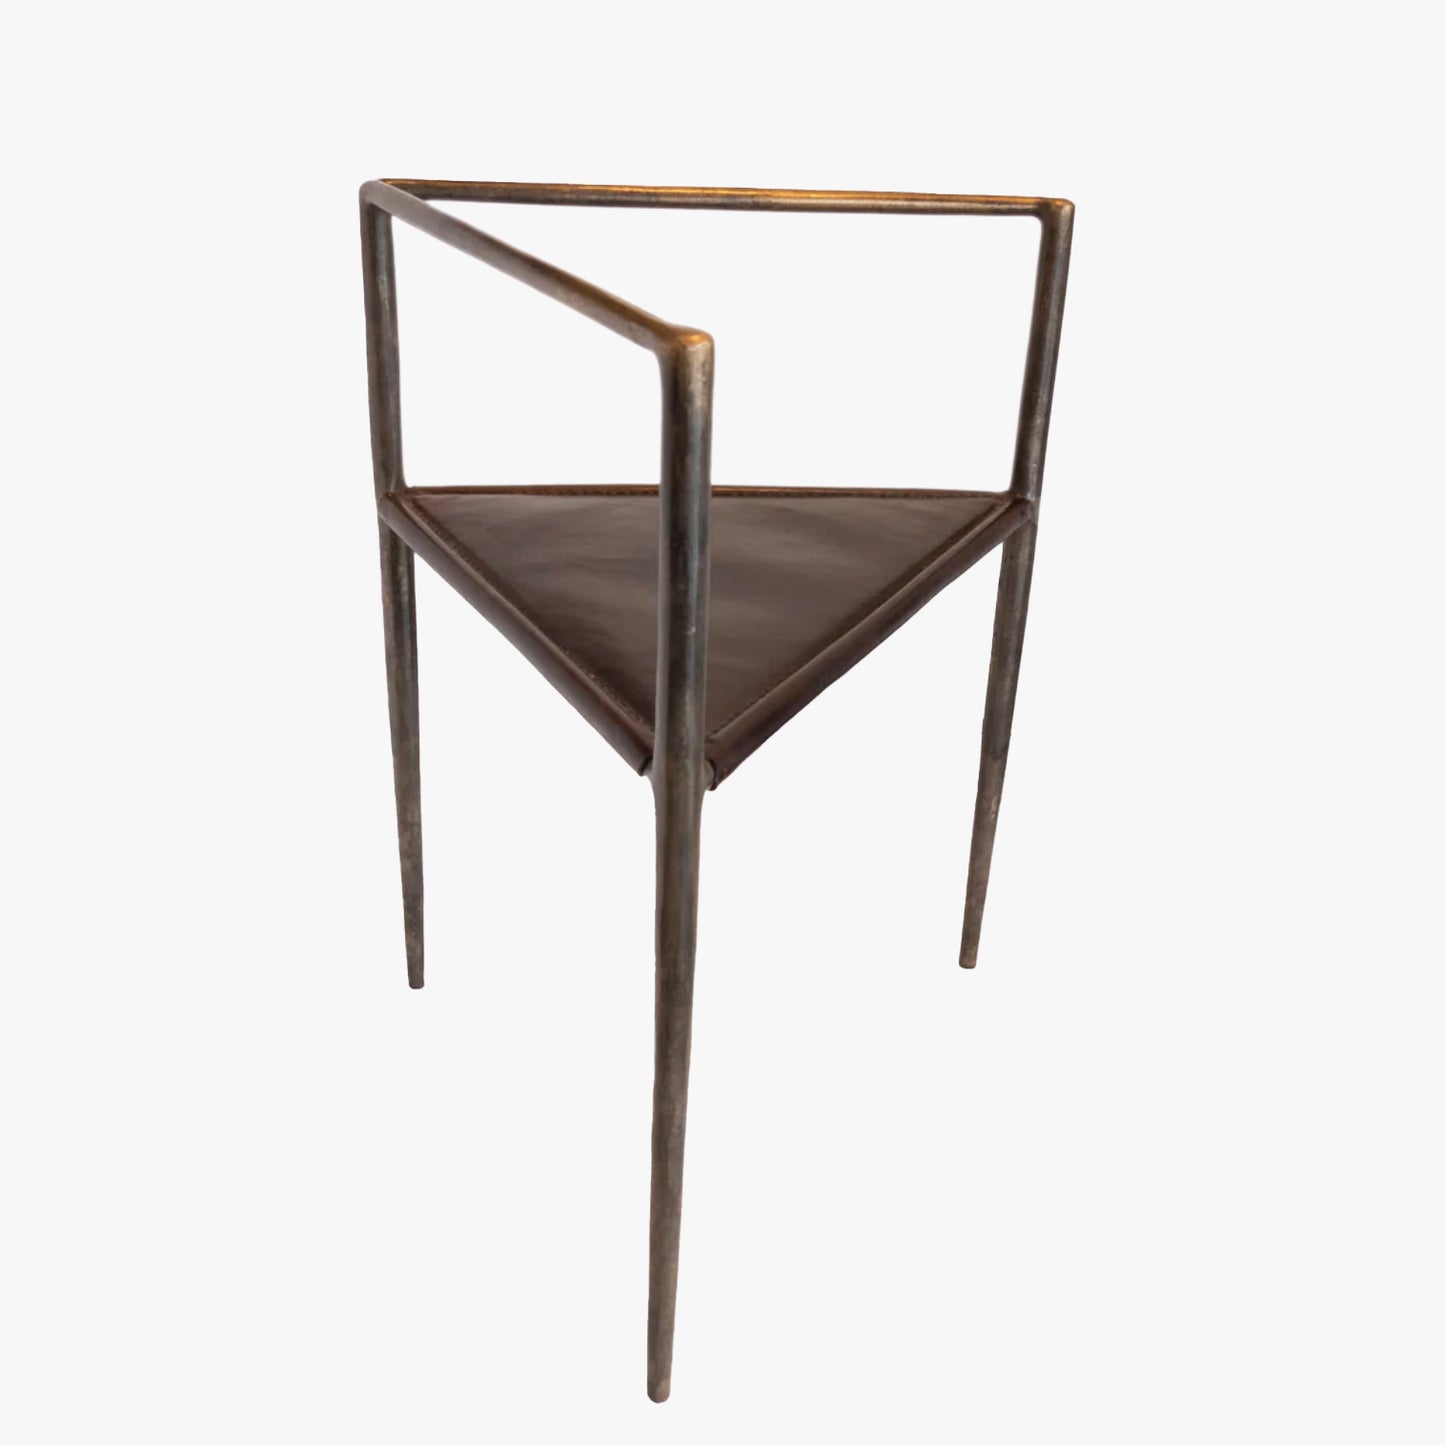 'Alchemy Chair' designed by Rick Owens